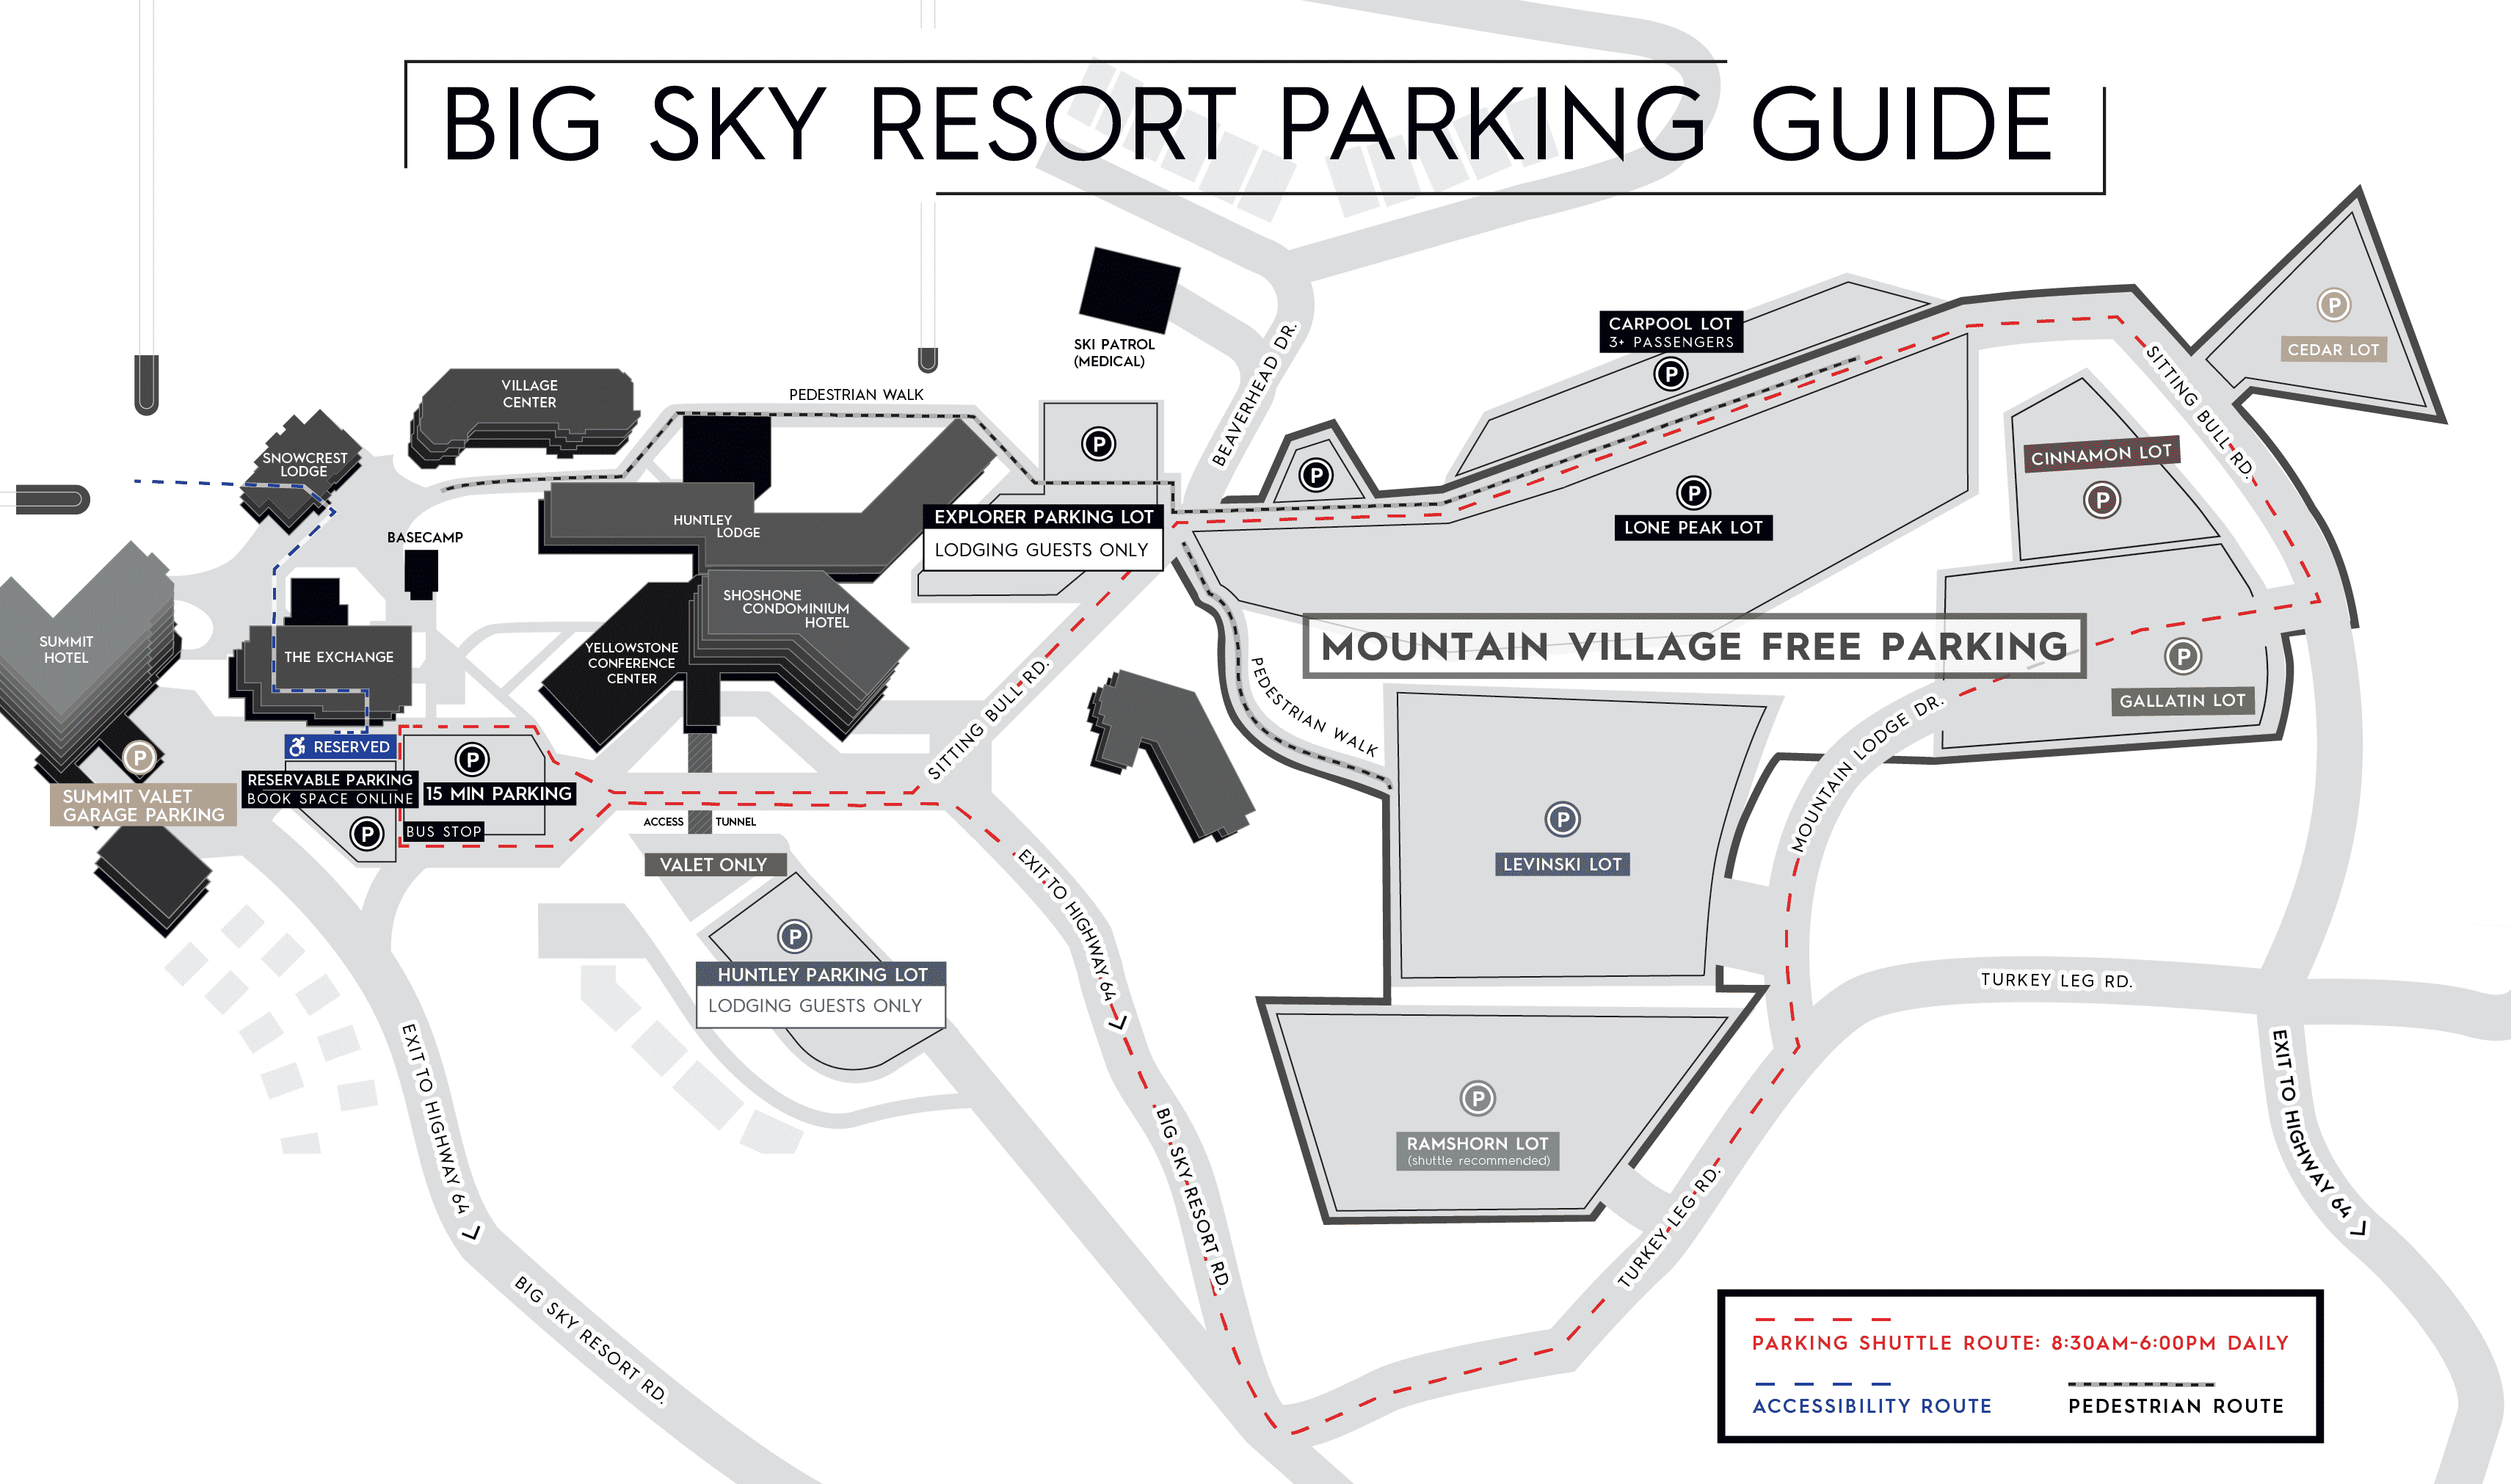 Parking Lot Map